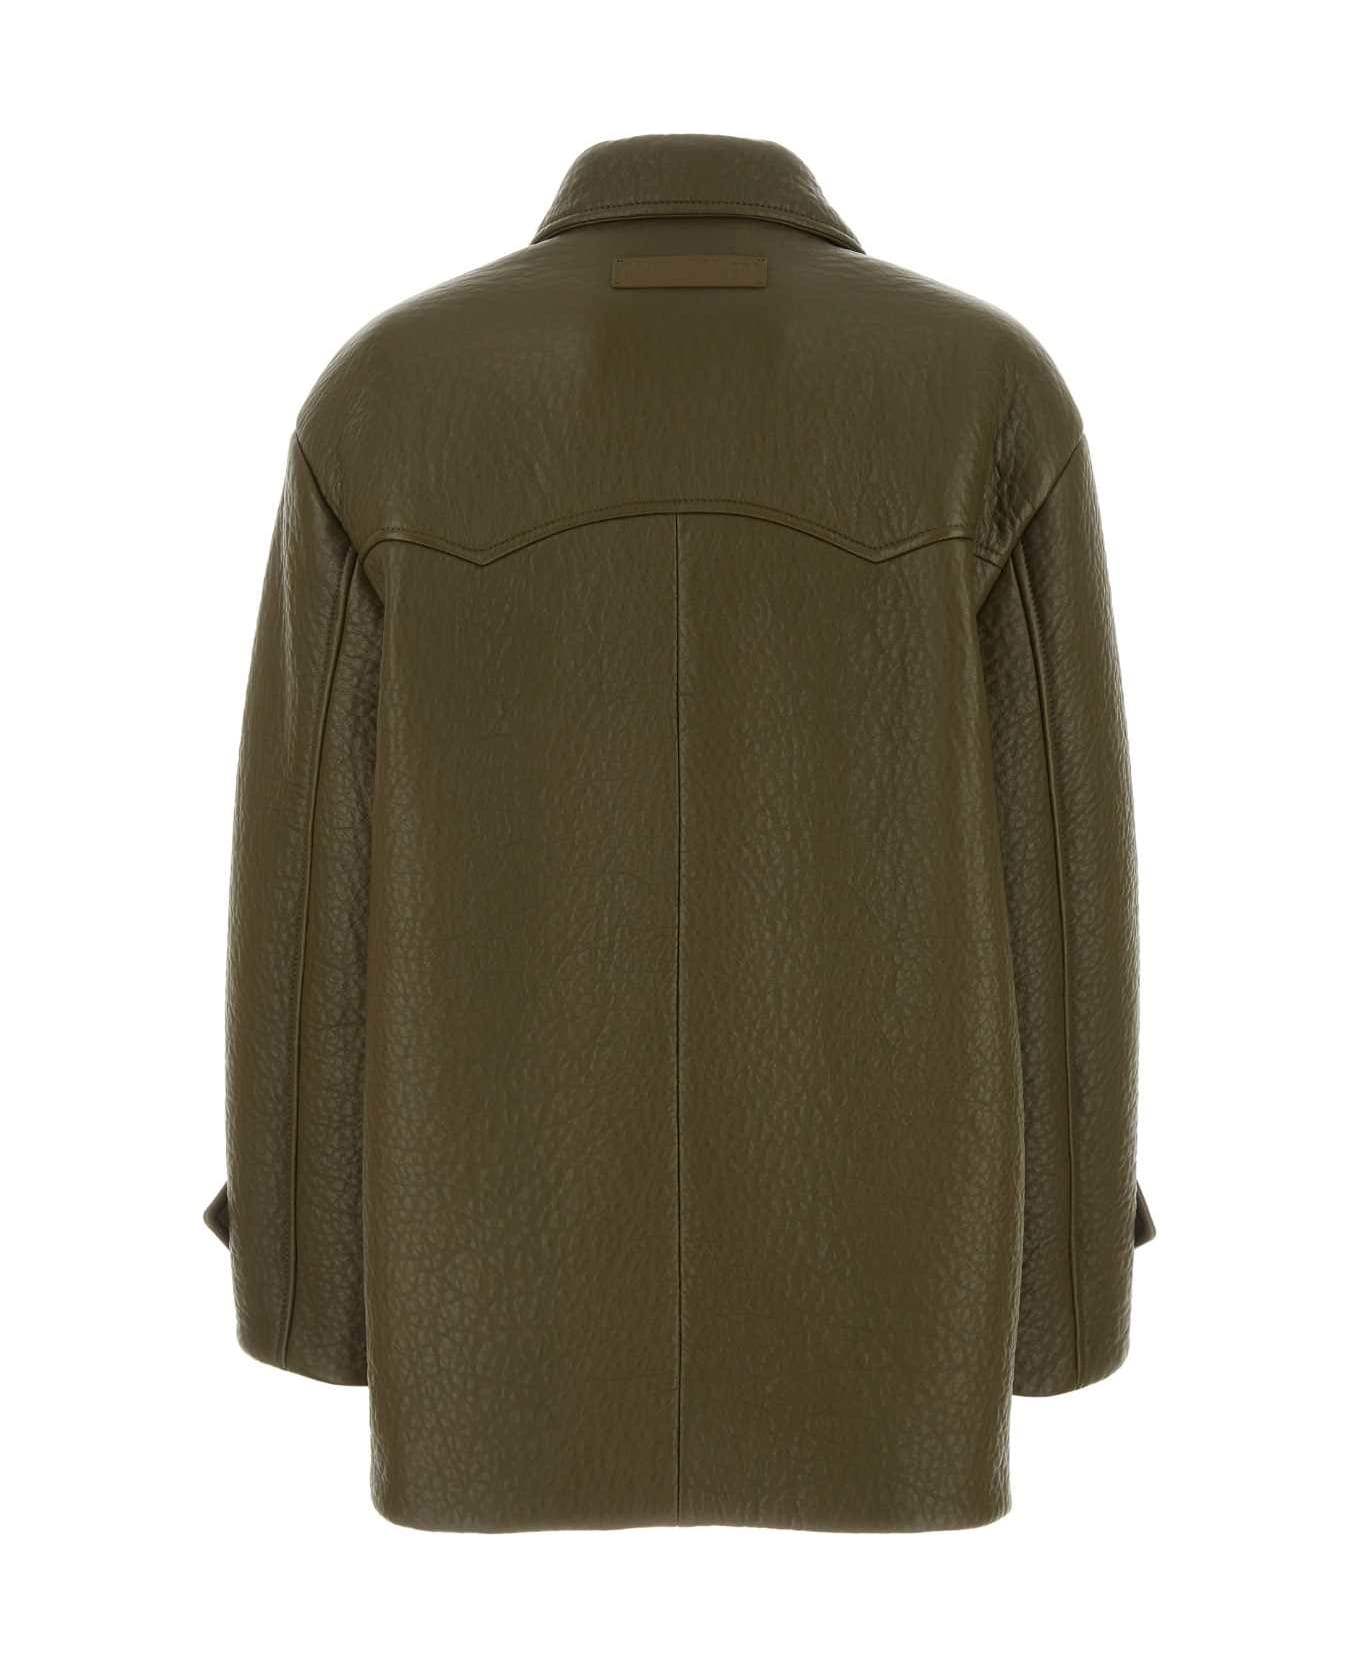 Miu Miu Army Green Nappa Leather Coat - MILITARE